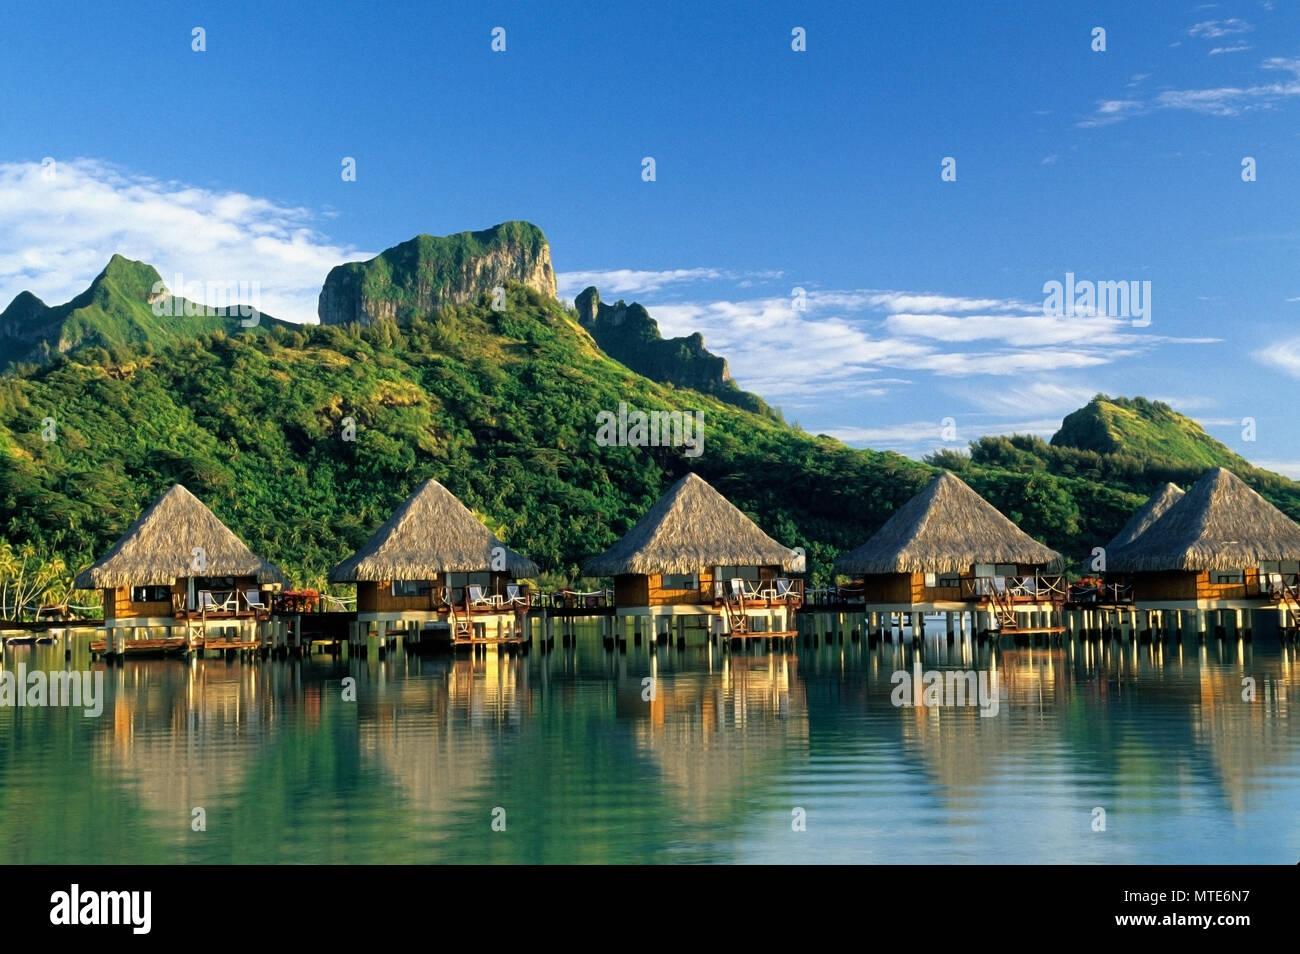 Moana Beach Park Royal Hotel, über Wasser Bungalows, Lagune, Matira Point, Bora Bora. Stockfoto